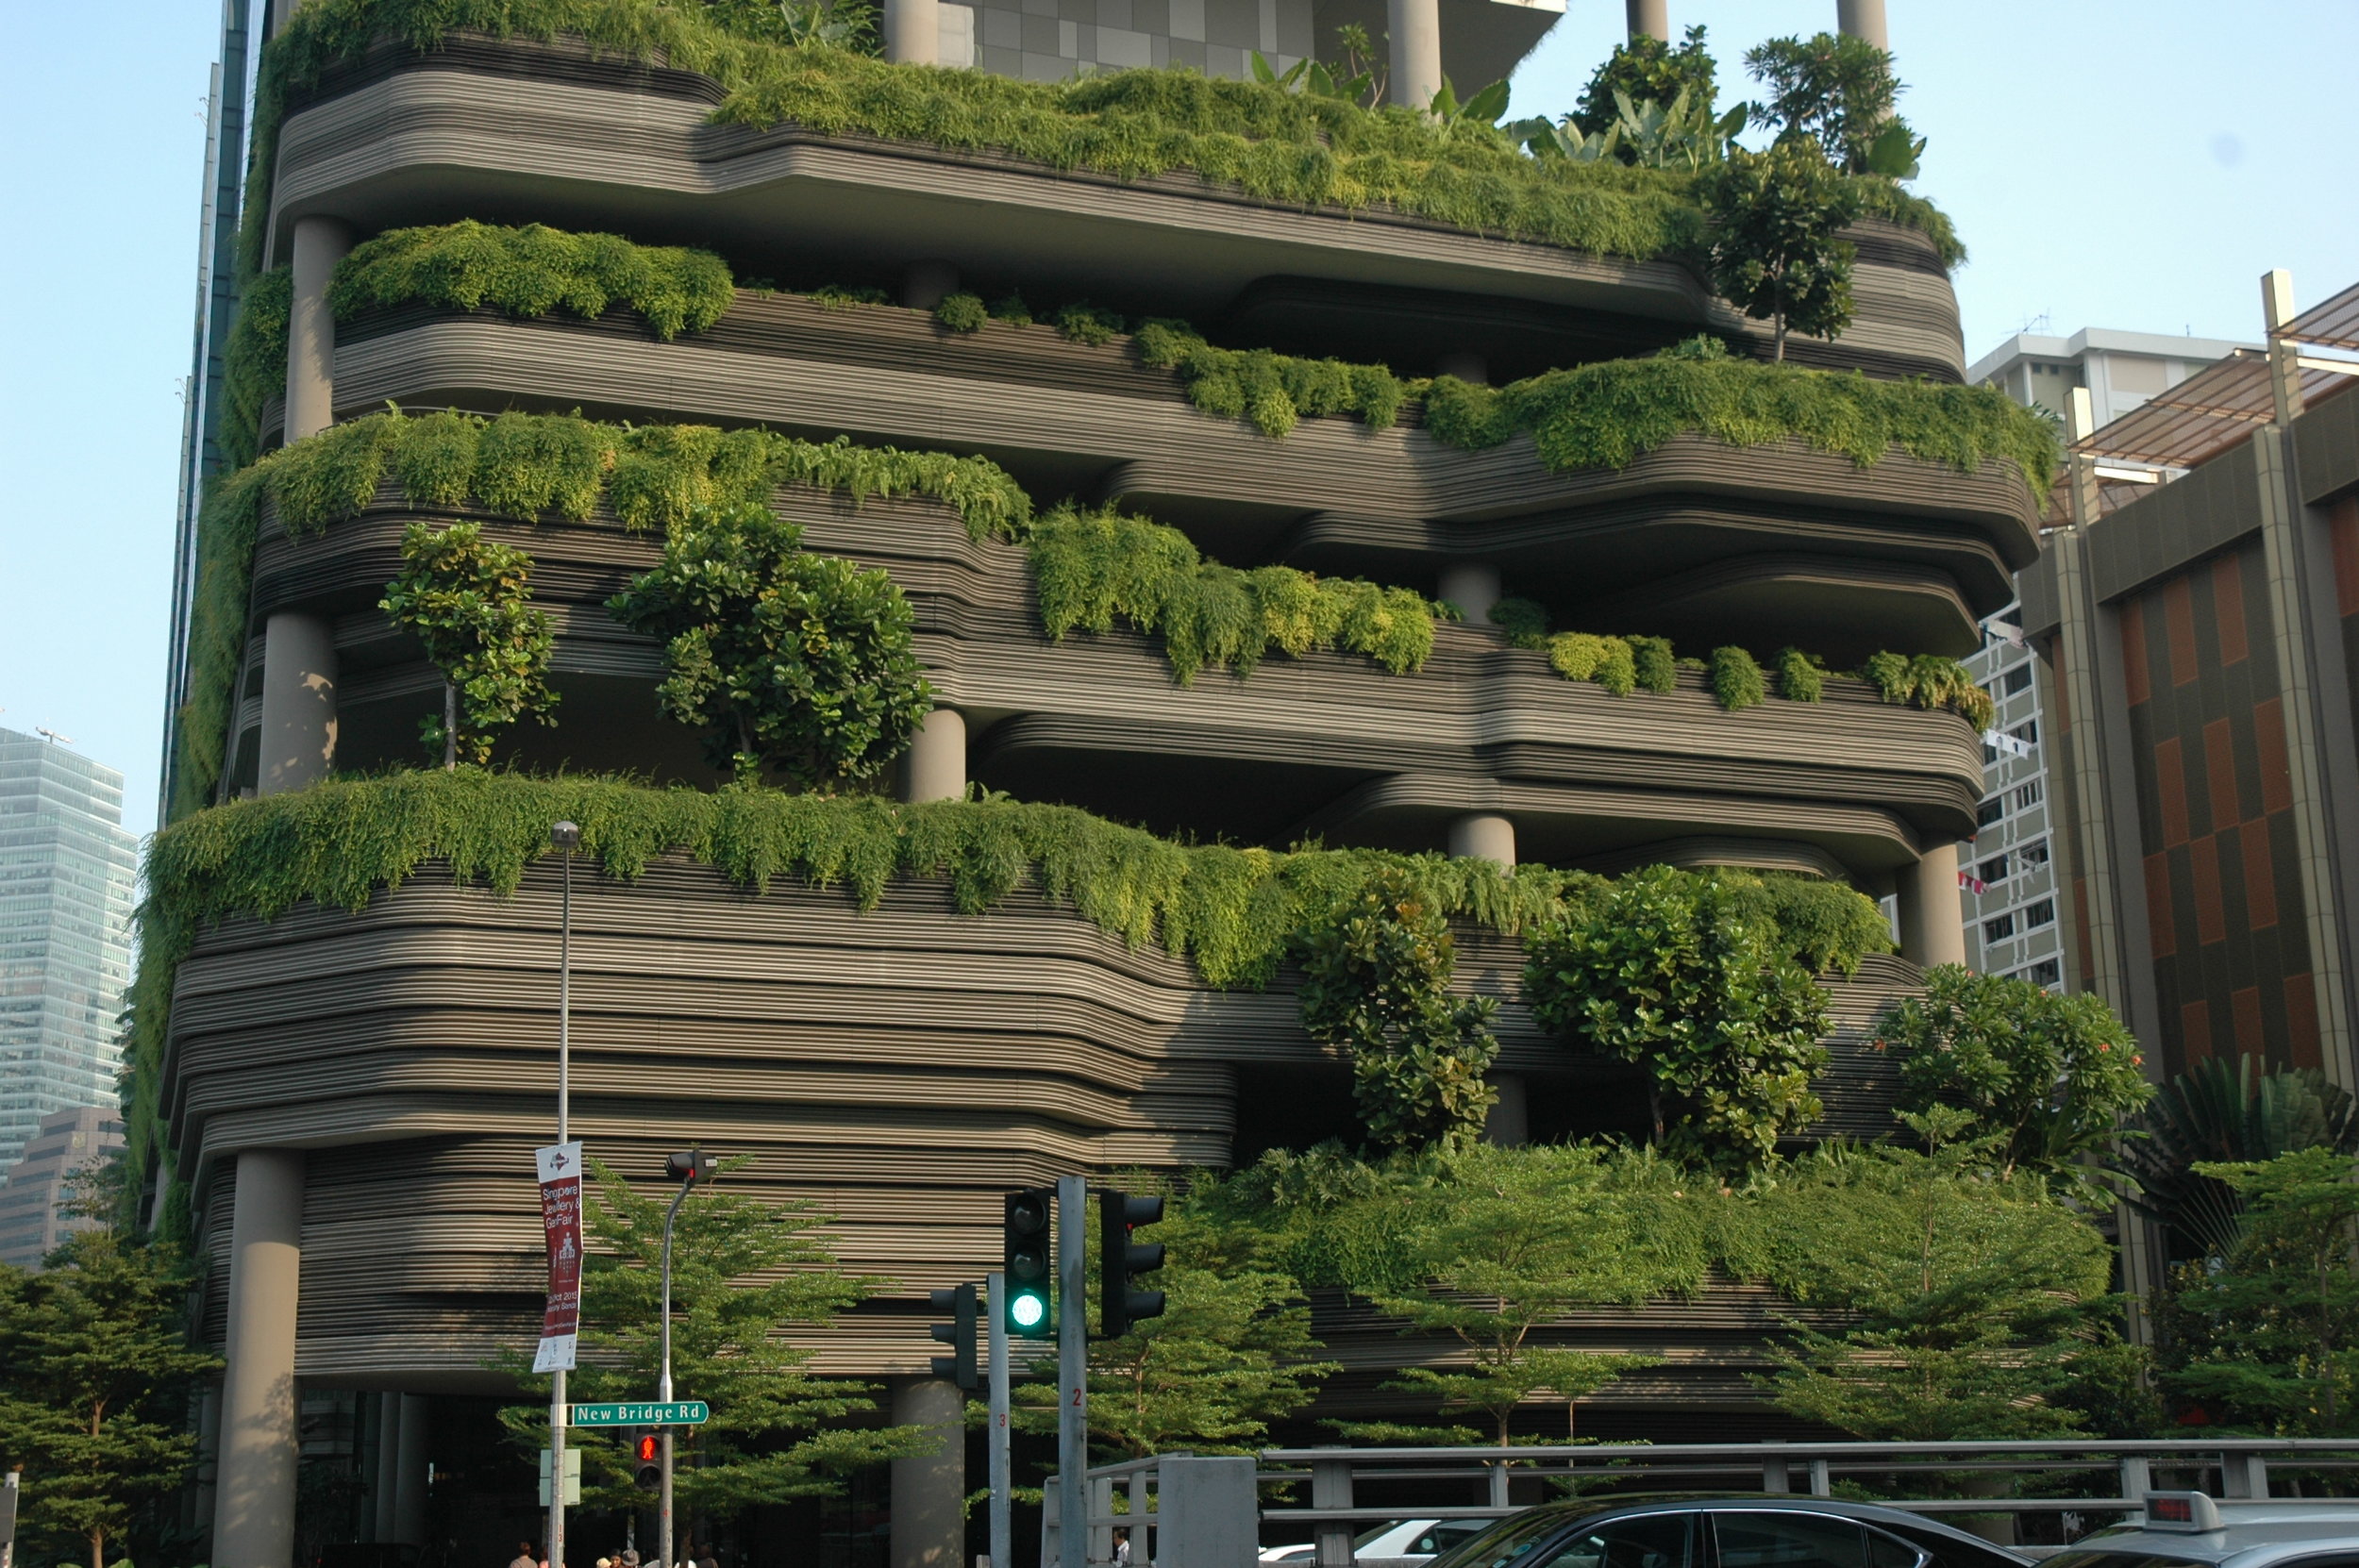 Singapore Biophilic Cities